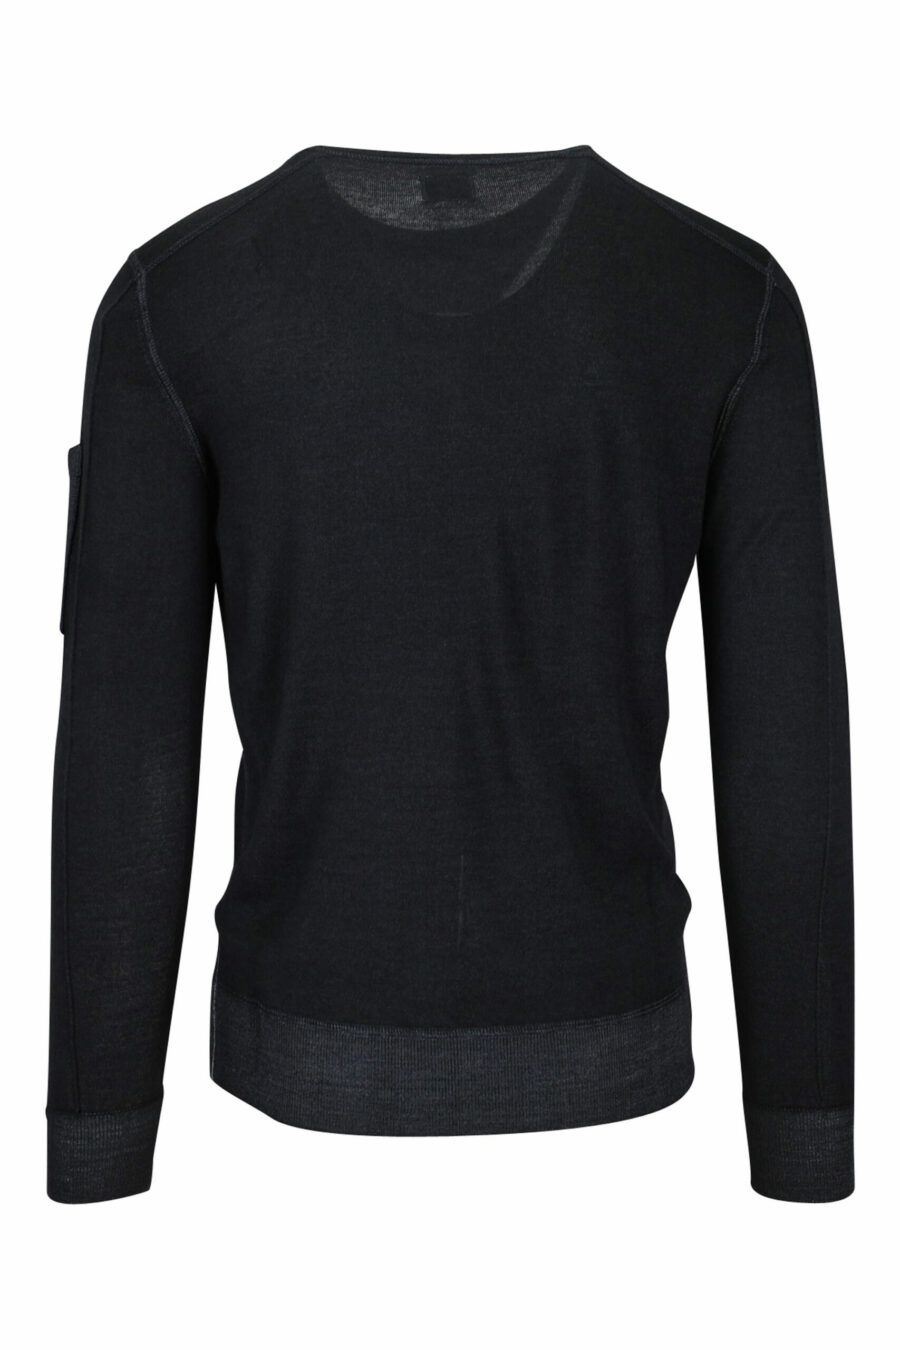 Black sweatshirt with side lens logo - 7620943583458 2 scaled